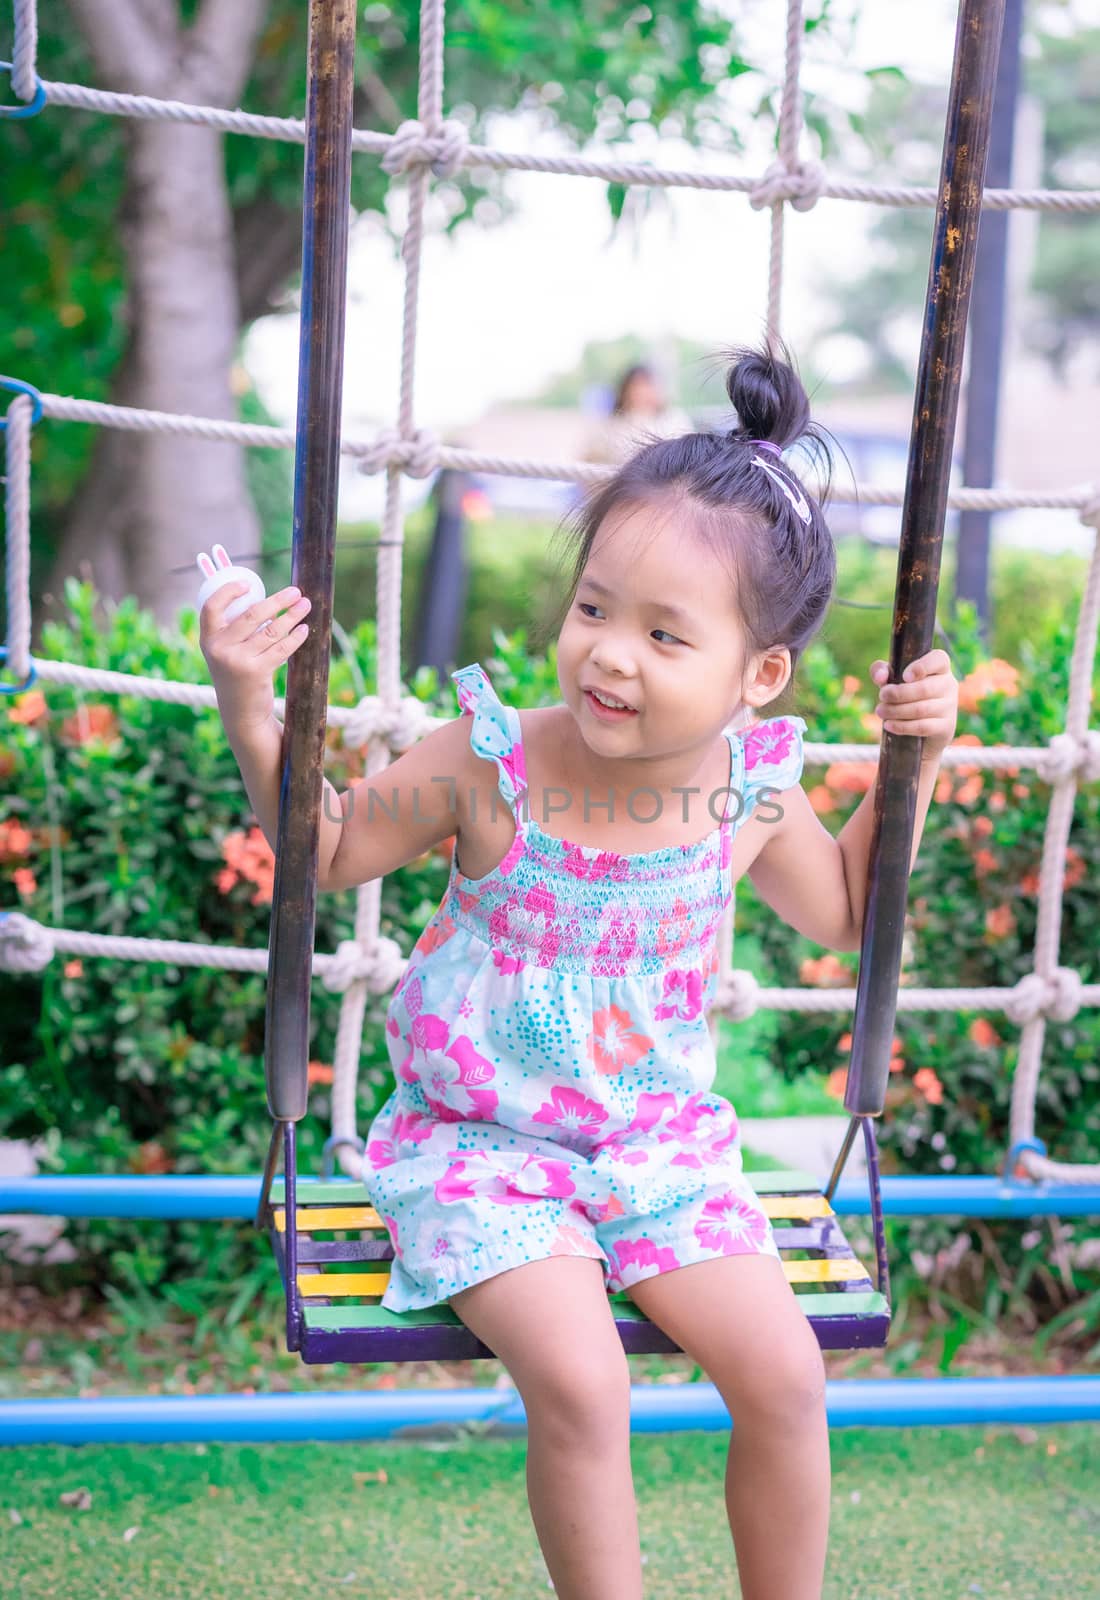 Little girl in dress sitting on a swing in the park